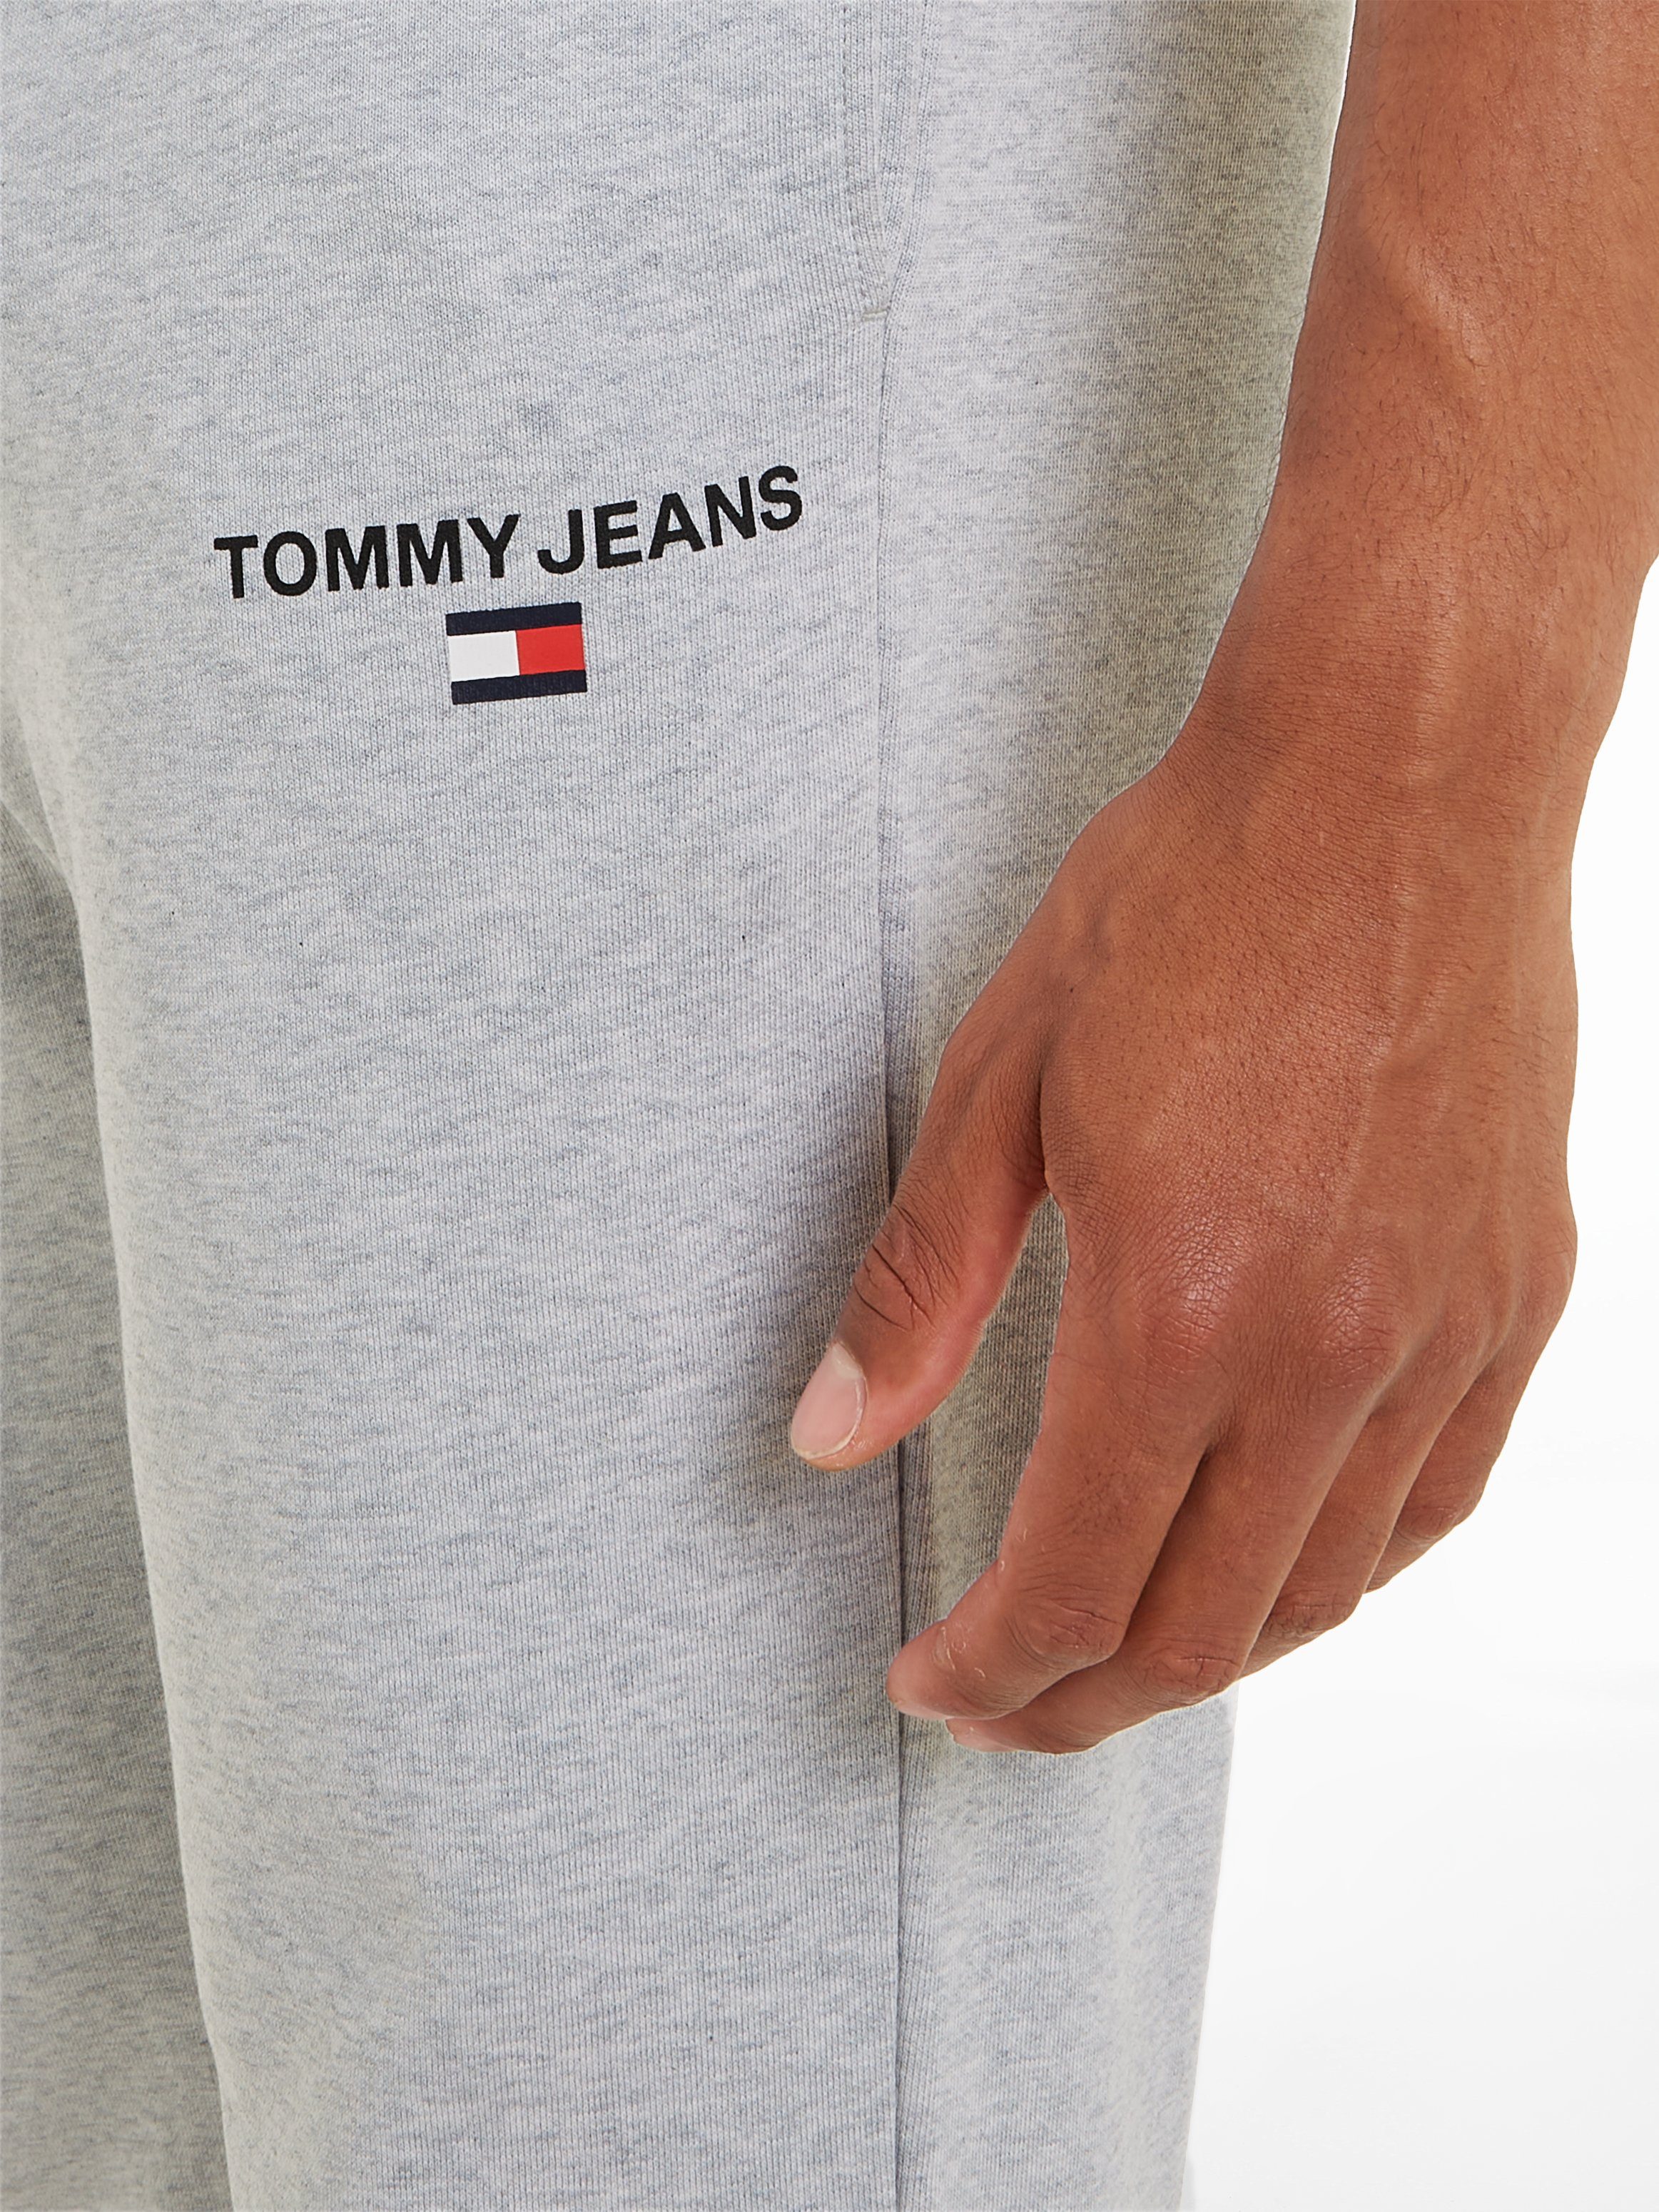 ENTRY Htr TJM Tommy Jeans REG Silver Grey JOGGER Sweathose GRAPHIC